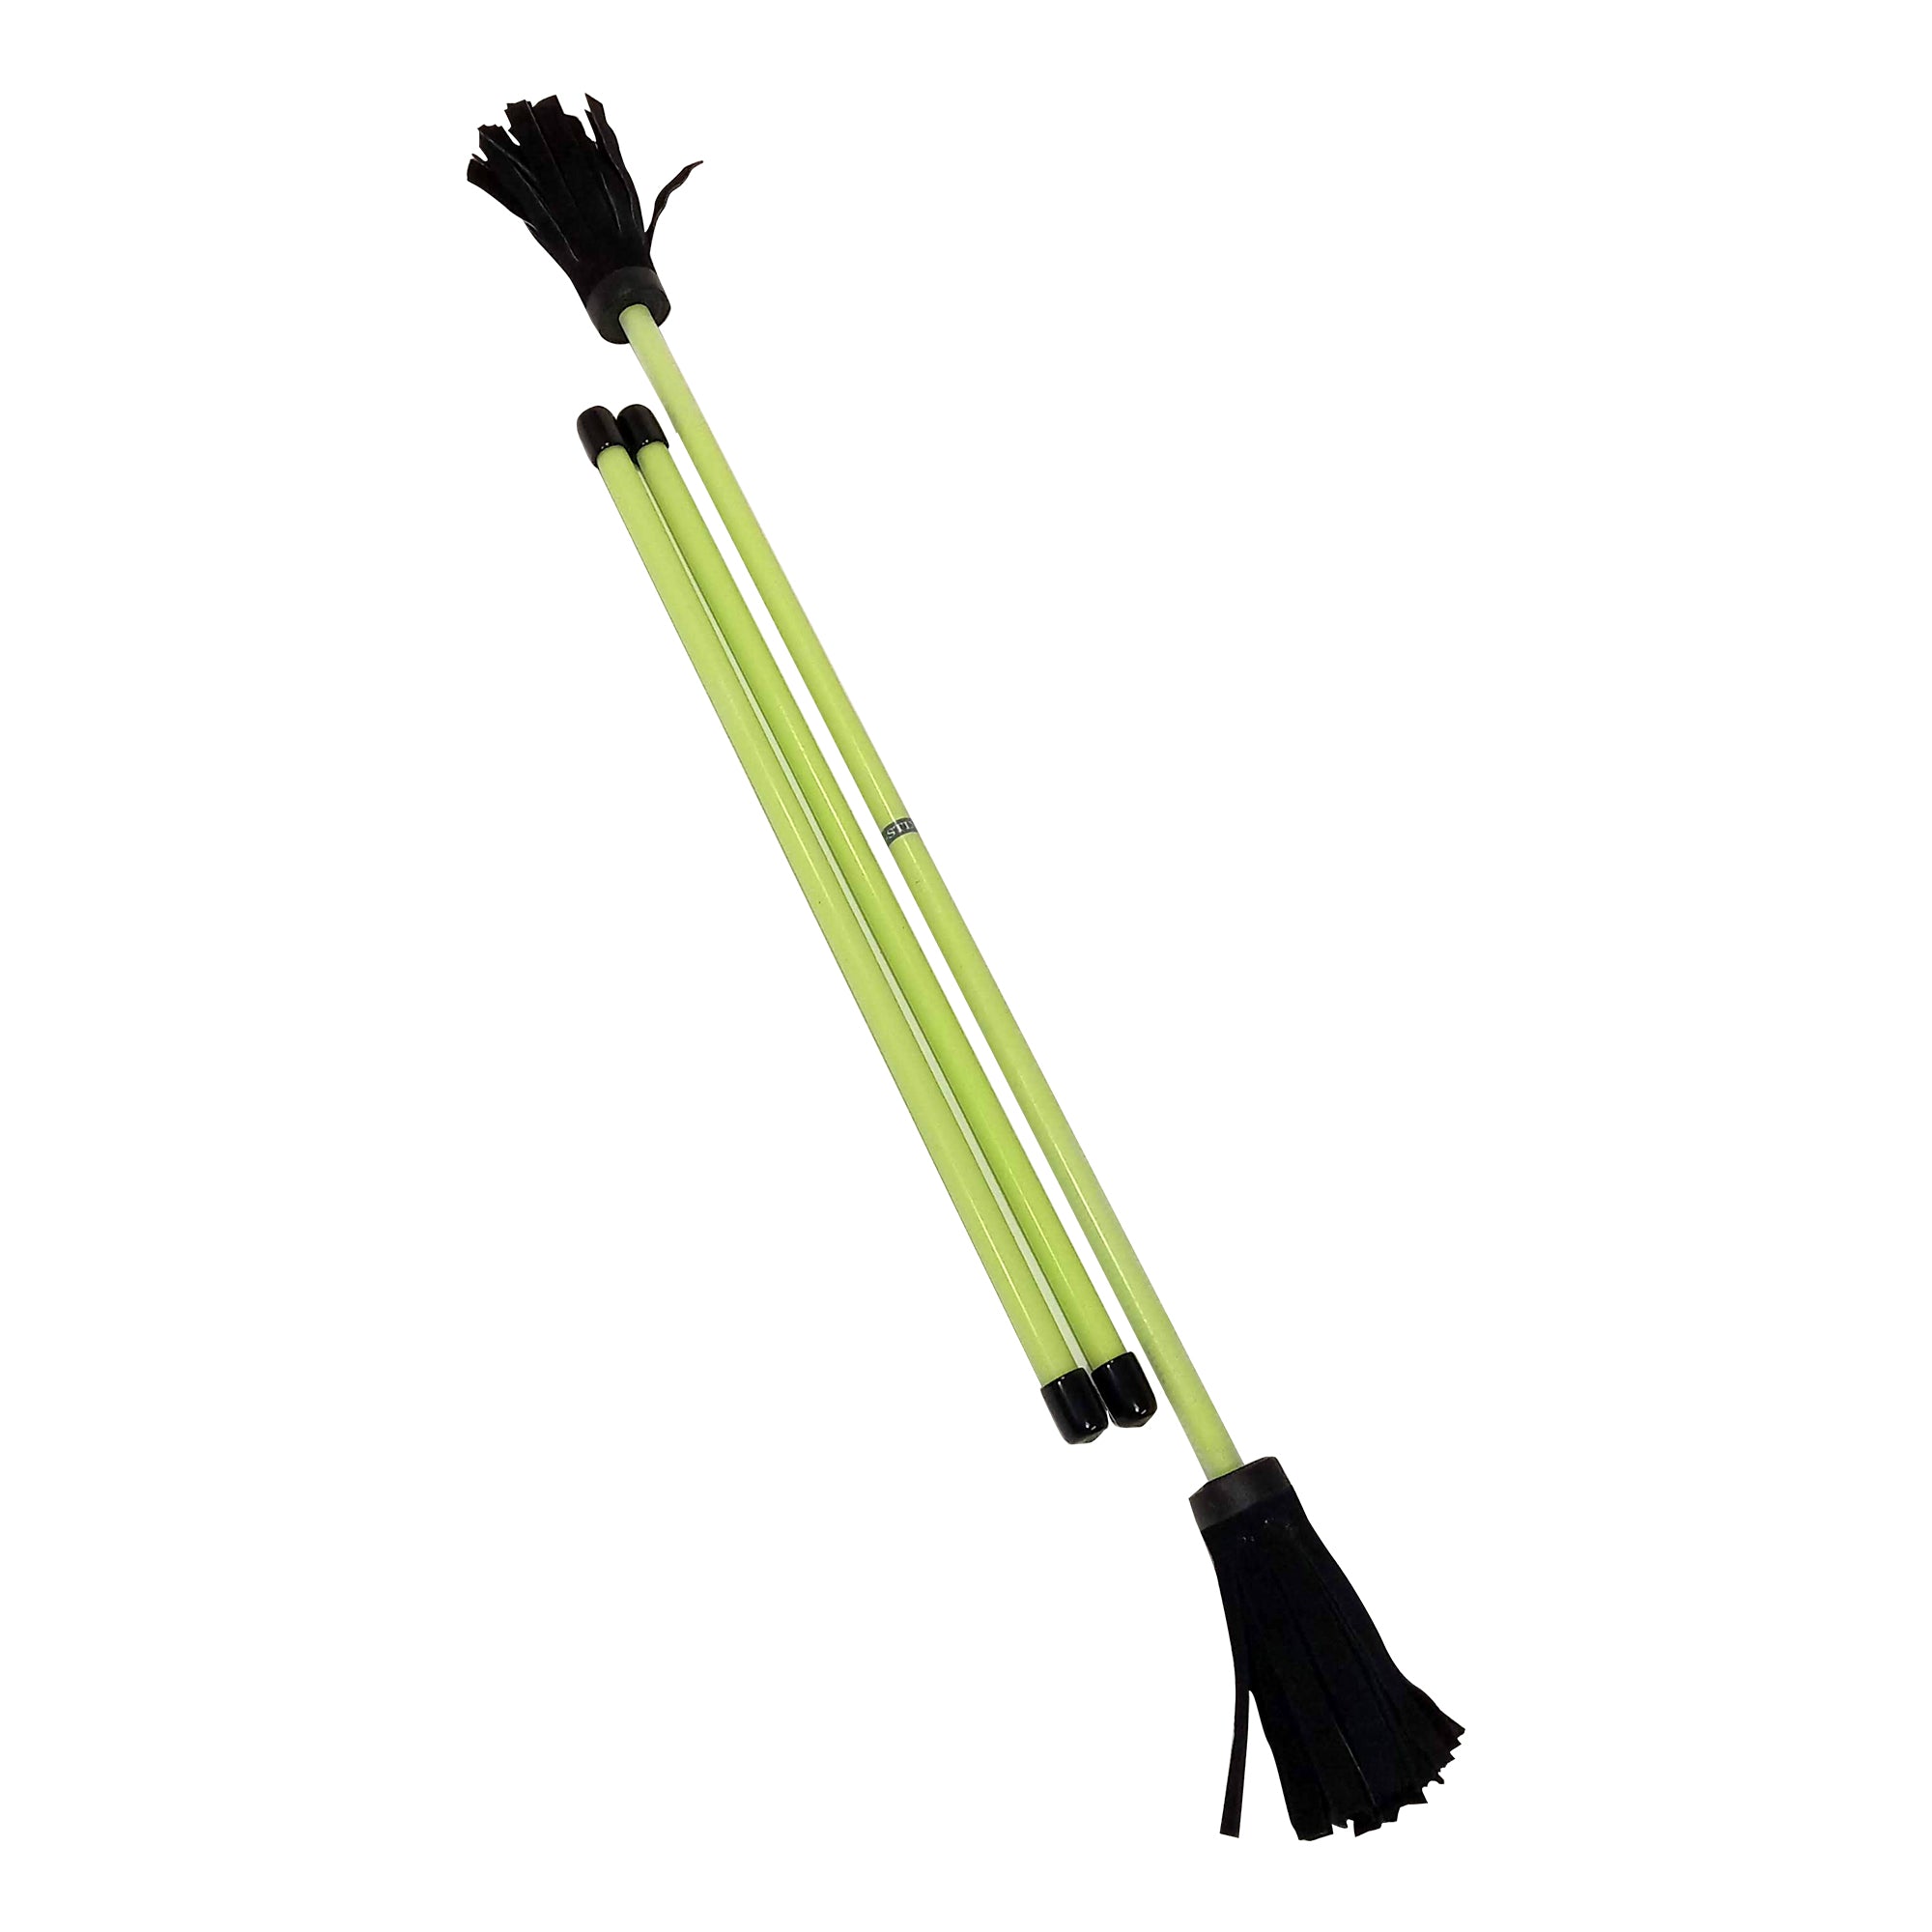 Z-Stix Professional Juggling Flower Sticks-Devil Sticks and 2 Hand Sticks,  Beginner Friendly - Neon Series (Mosquito (17 HS 22 Stick), Yellow)